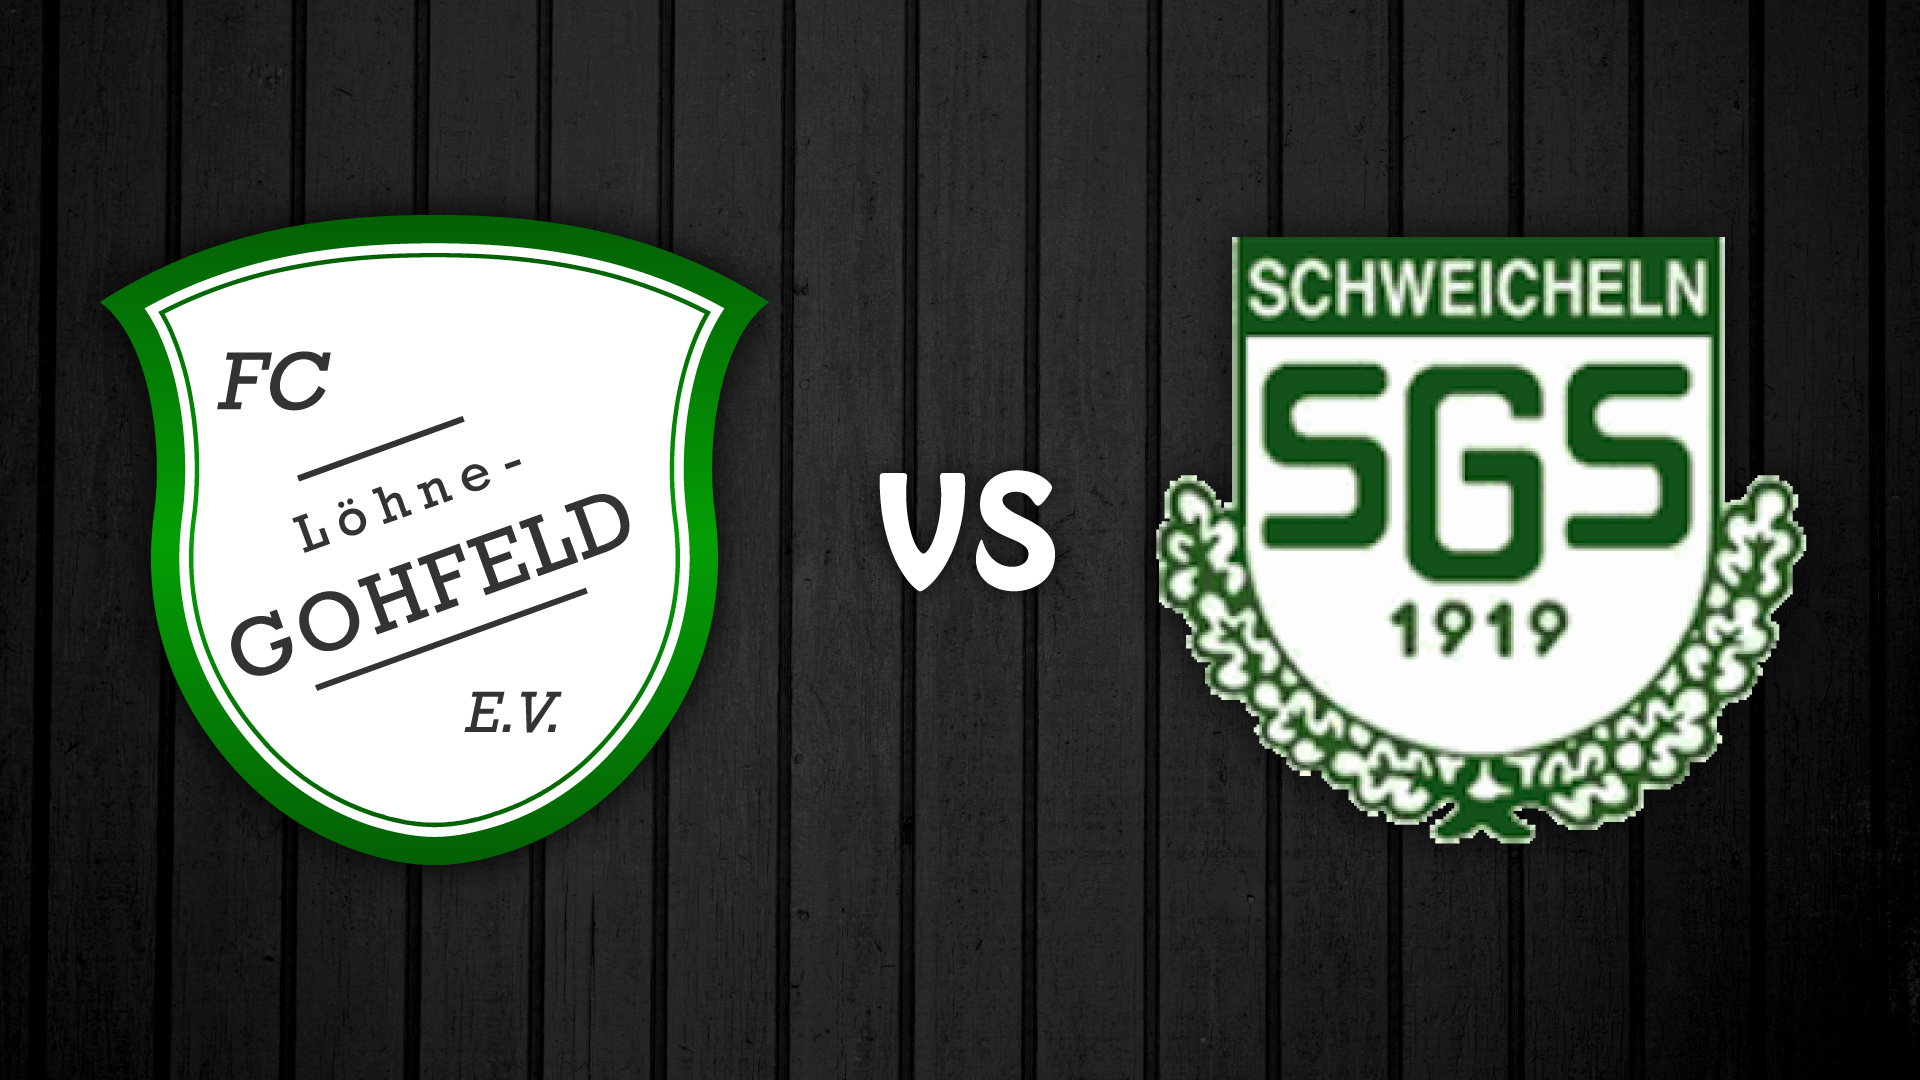 FC Löhne-Gohfeld I vs. SG Schweicheln